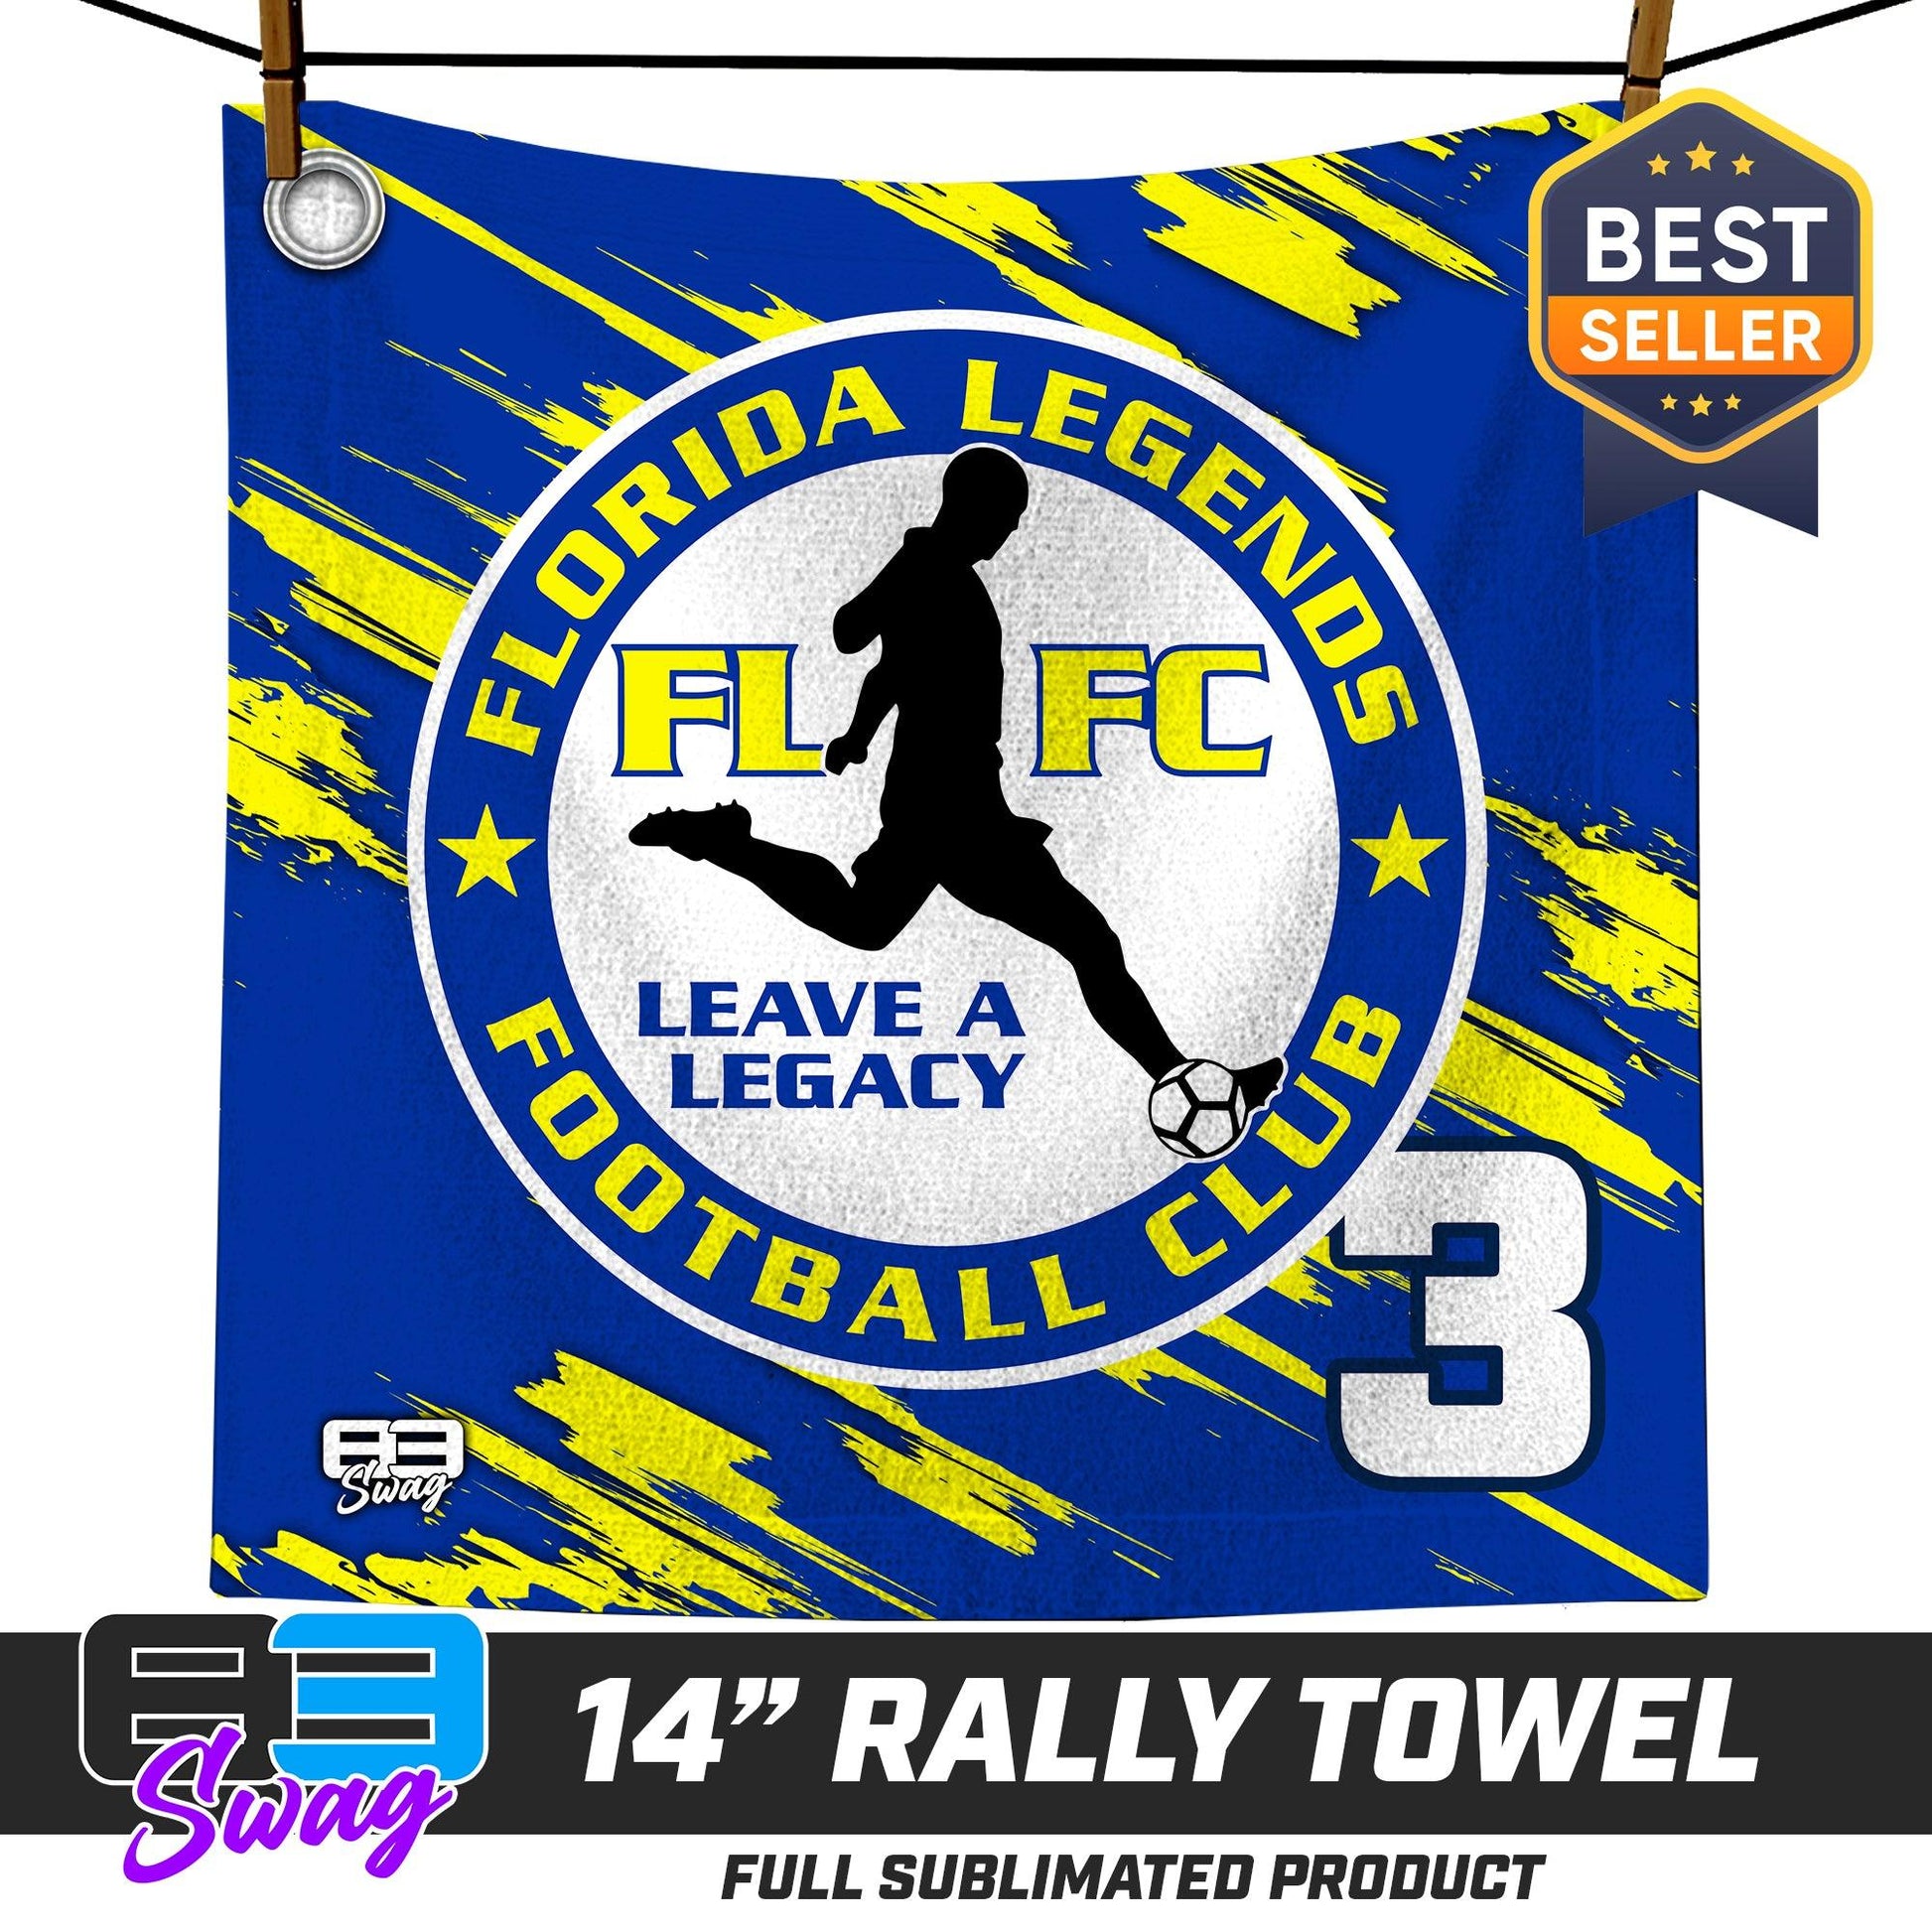 14"x14" Rally Towel - Florida Legends FC - 83Swag